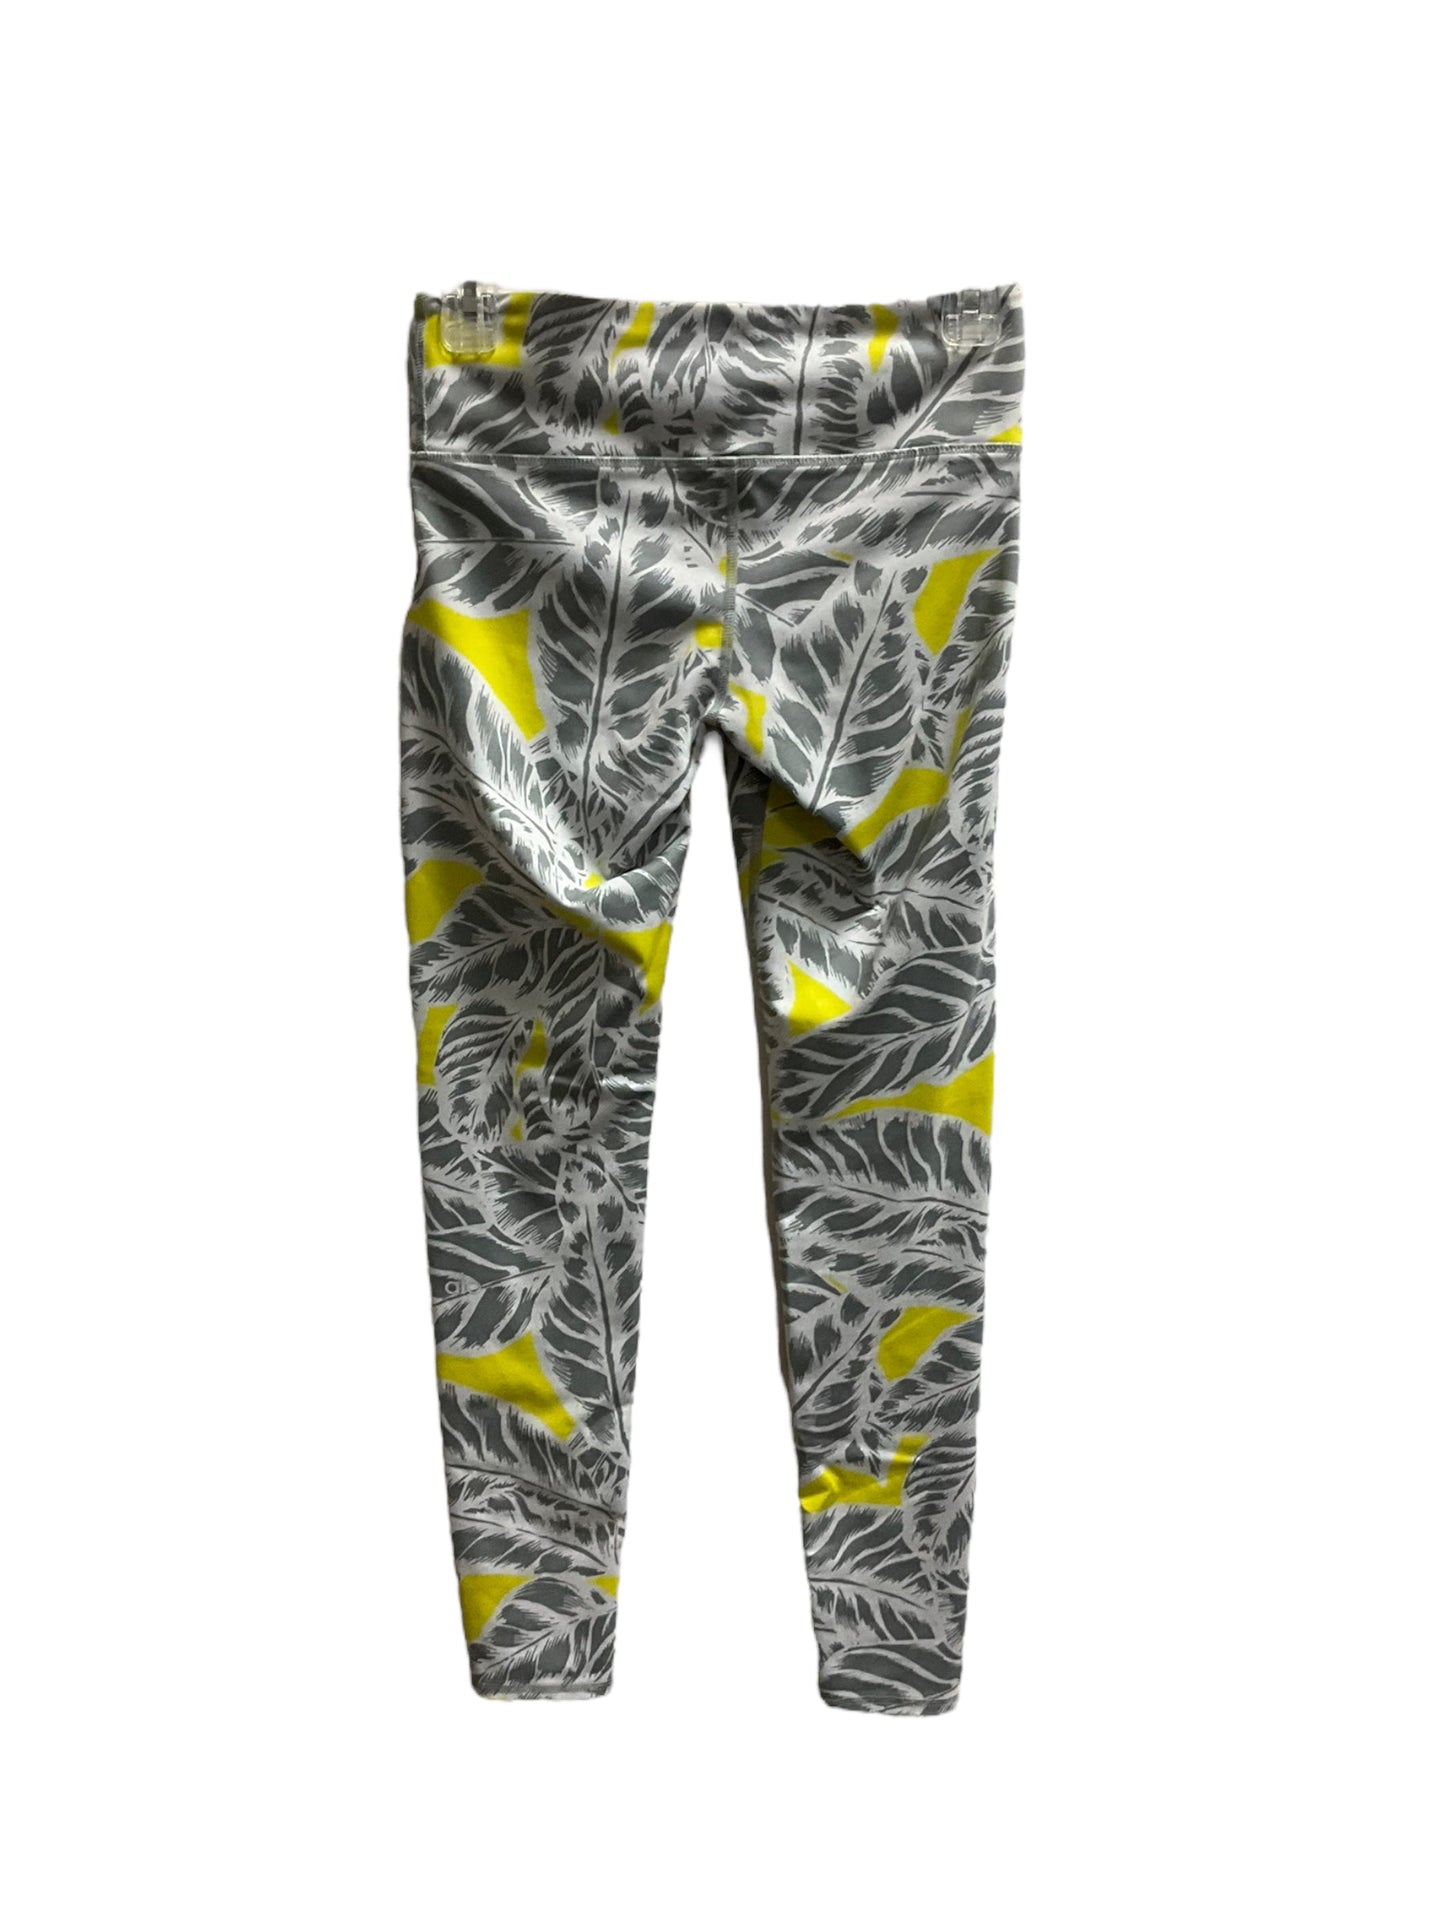 Grey & Yellow Athletic Leggings Alo, Size Xs